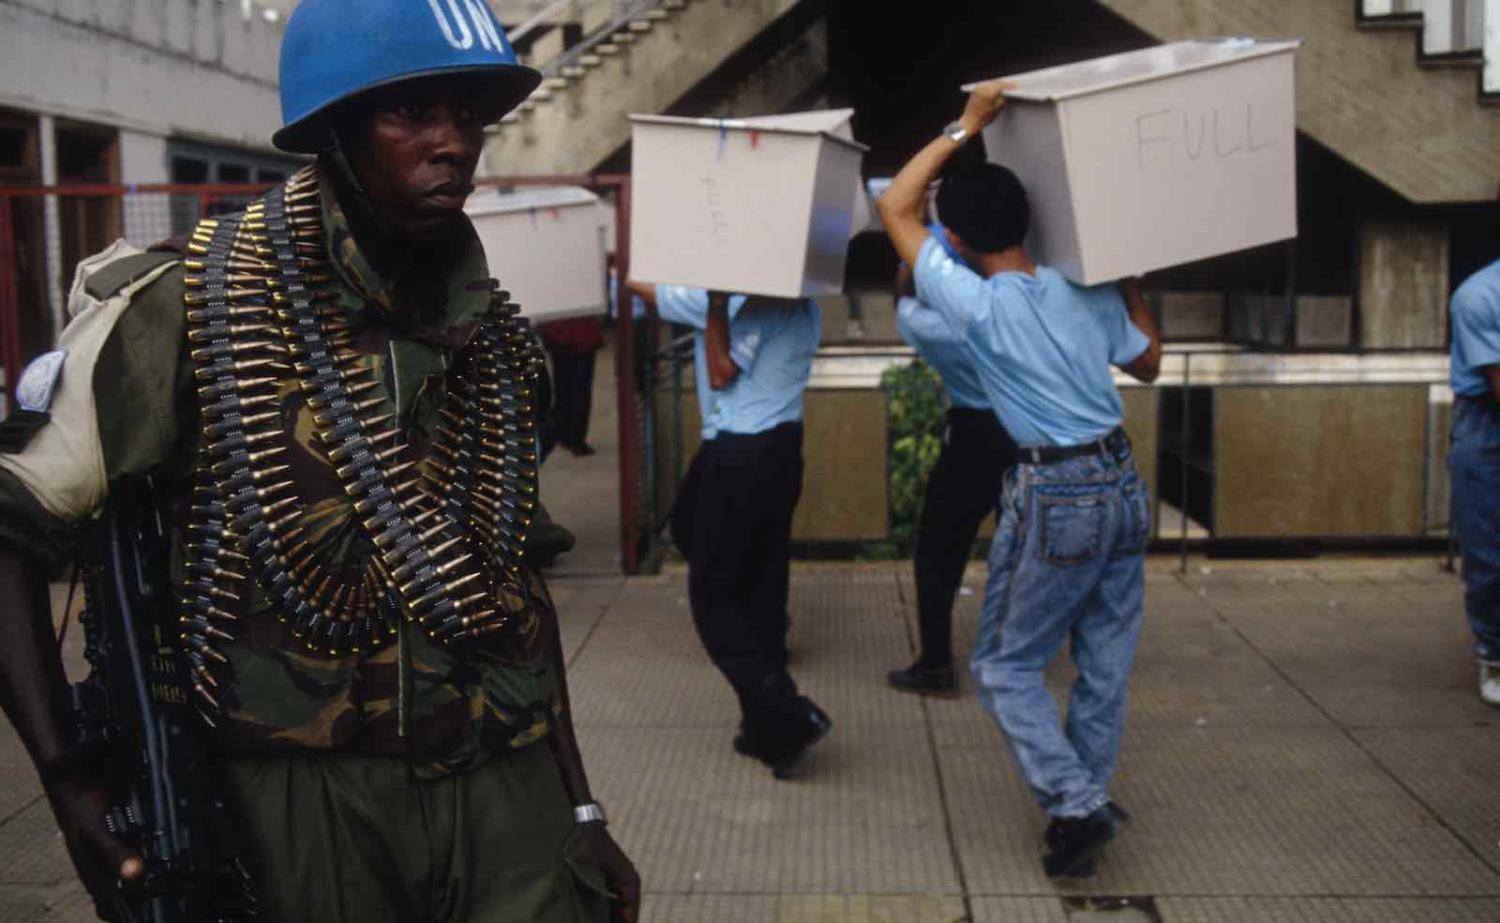 Ballot boxes are collected in Cambodia under UN supervision in 1993 (Photo: Noboru Hashimoto via Getty)